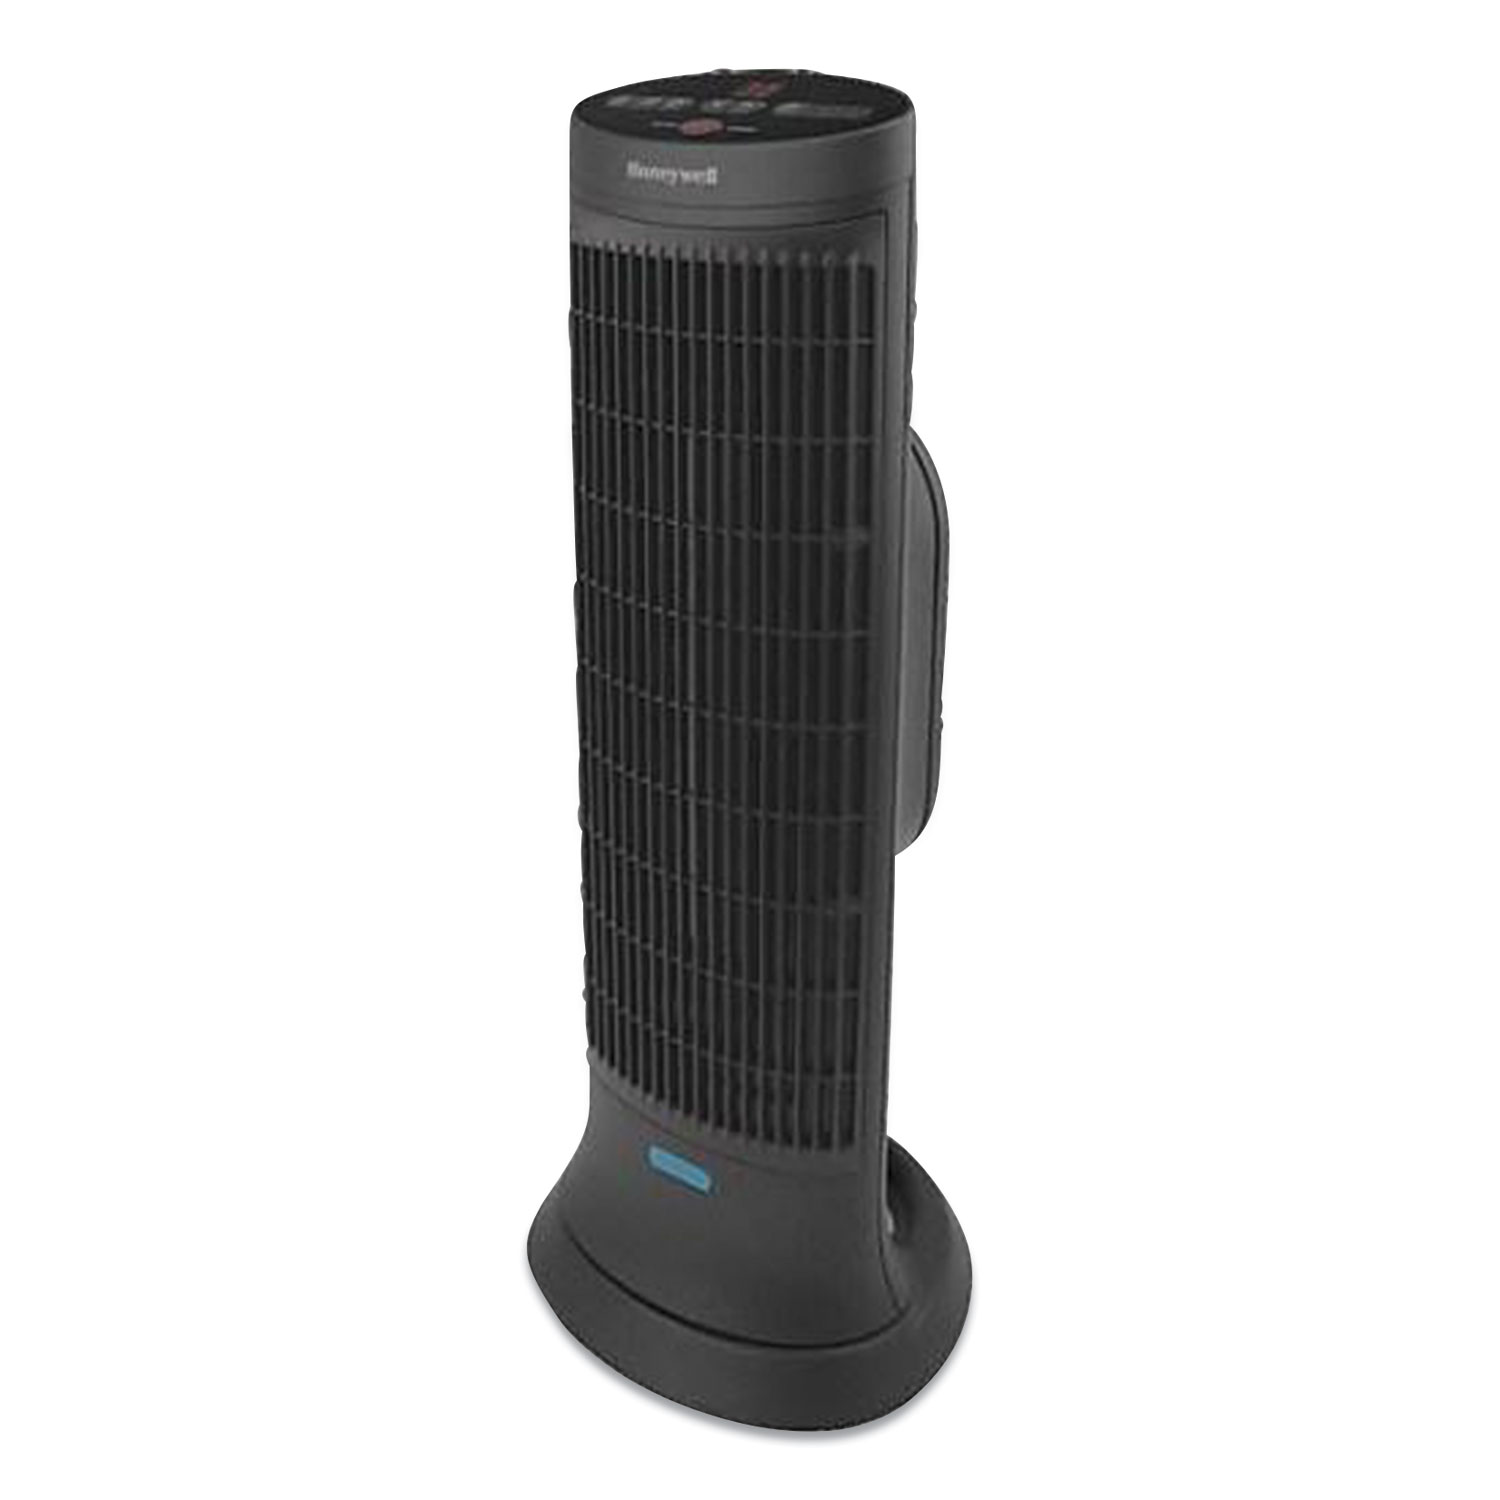  Honeywell HCE323V Digital Ceramic Tower Heater with Motion Sensor, 1,500 W, 8.7 x 6.69 x 23.15, Dark Gray (HWL1034670) 